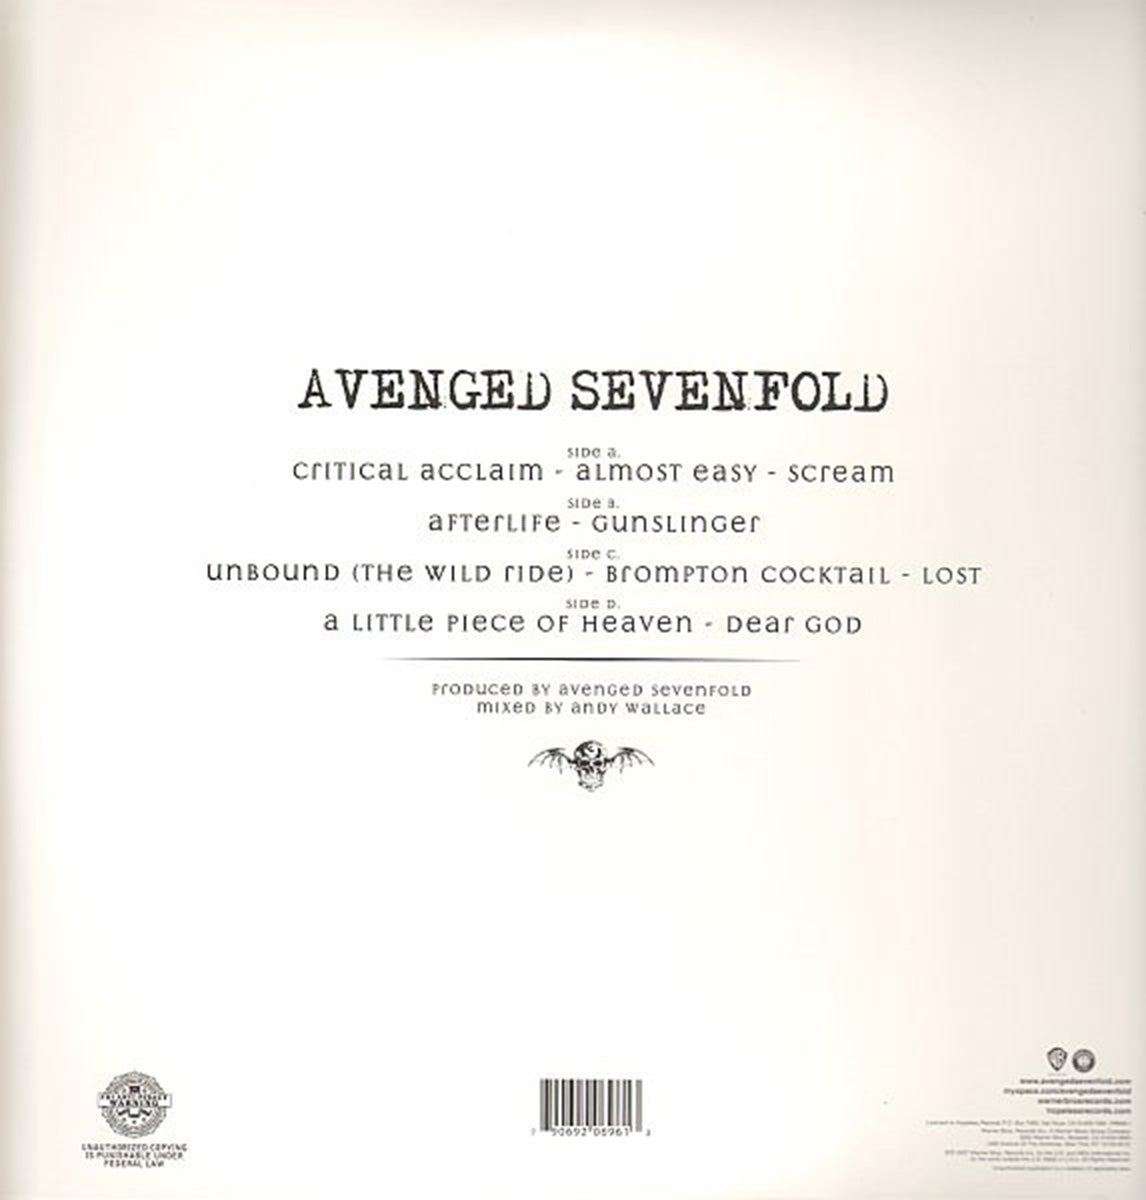 Avenged Sevenfold – Avenged Sevenfold - 2007 US Pressing